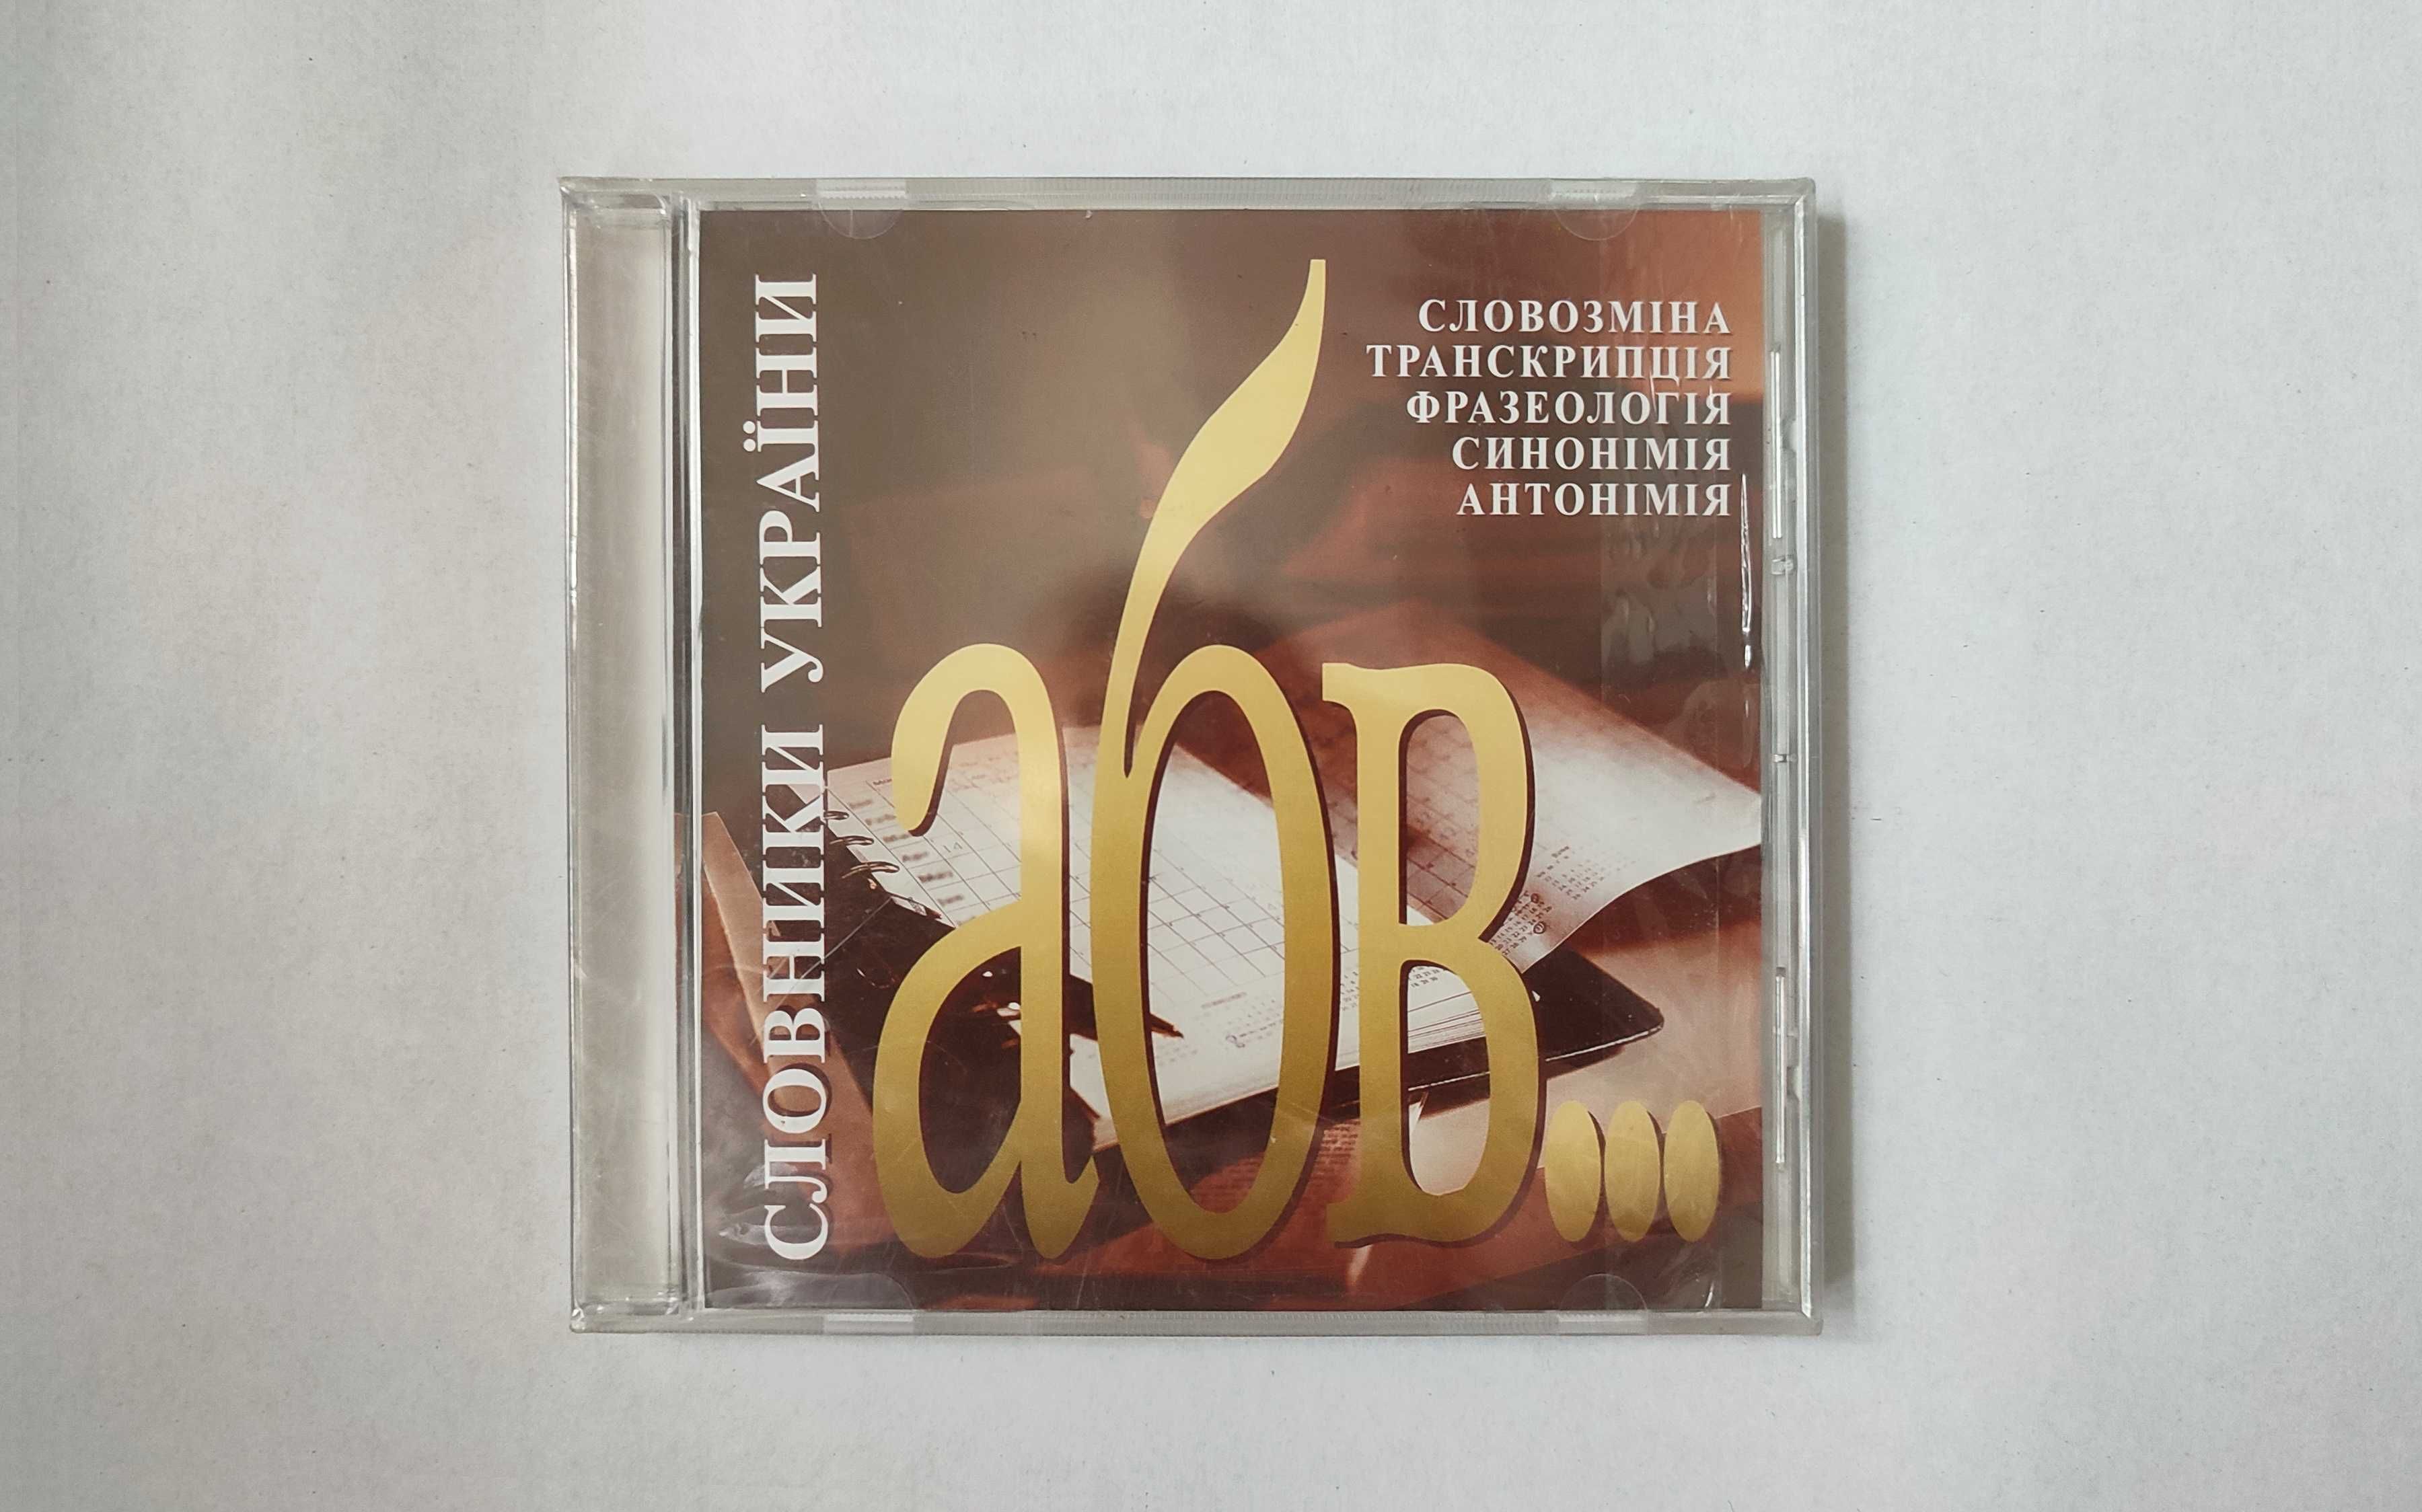 «Словники України - інтегрованна лексикографічна система» - CD диск